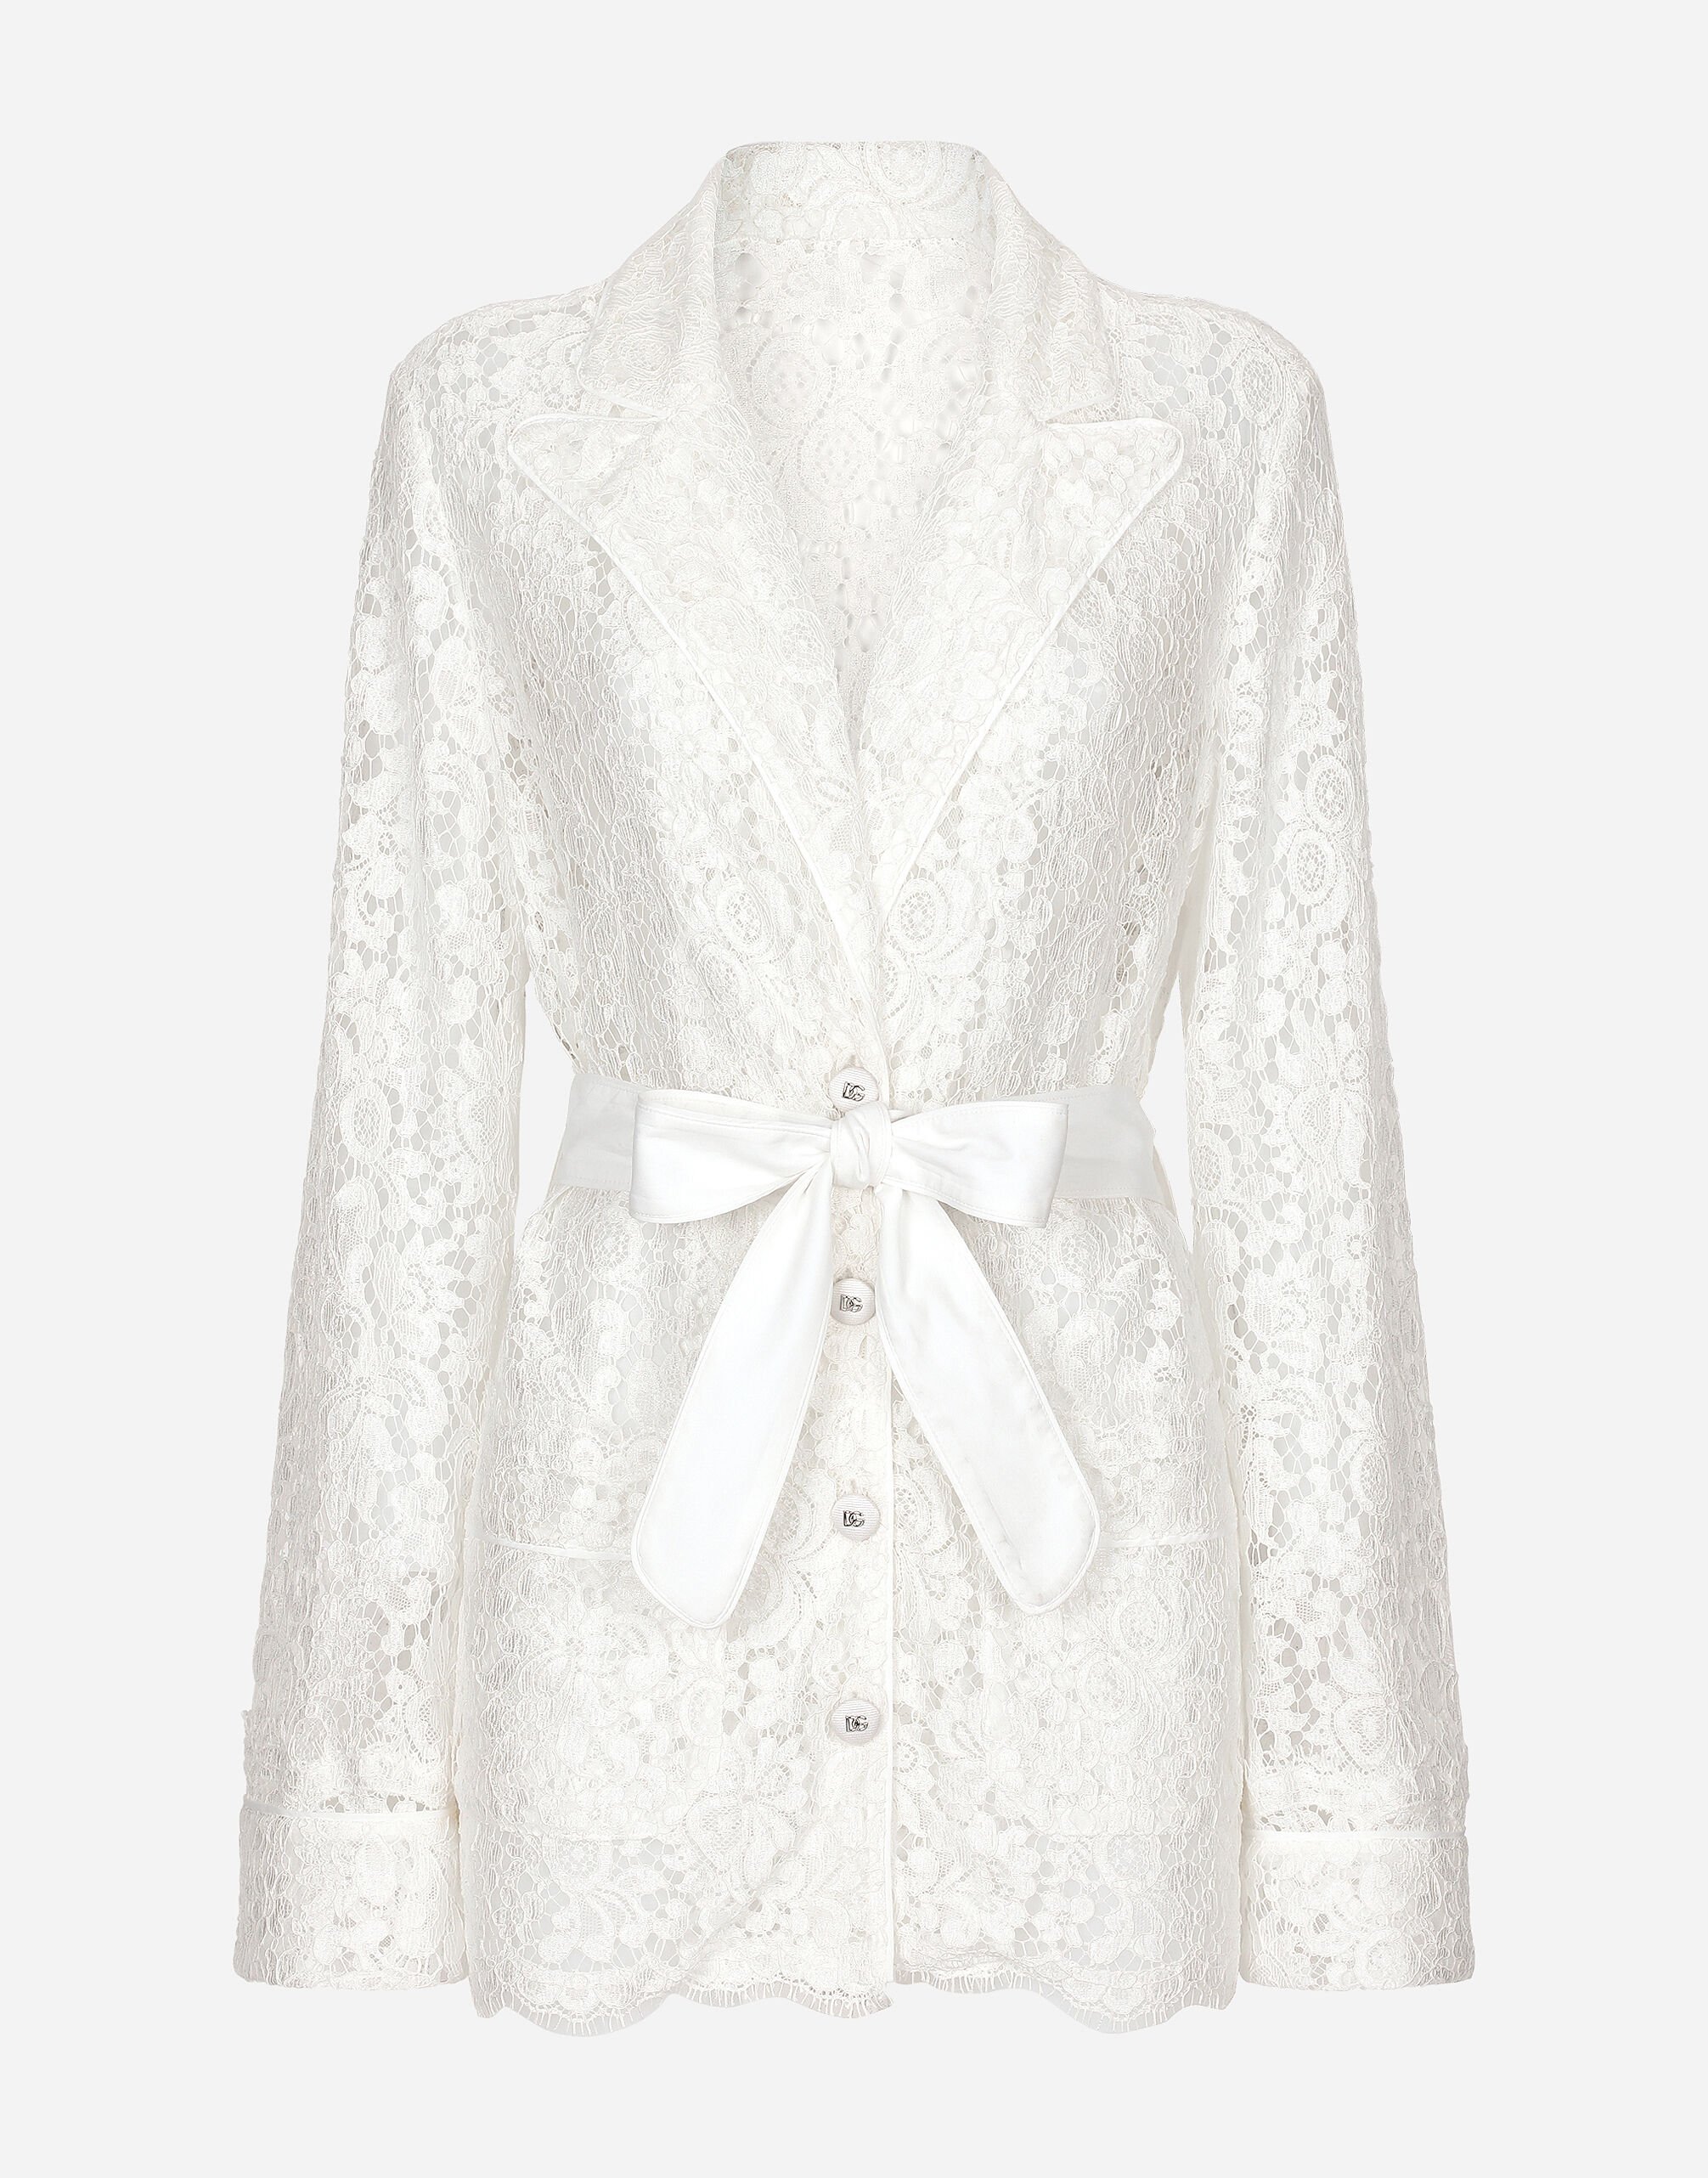 Dolce & Gabbana Floral cordonetto lace pajama shirt Print F6GAZTHS5Q0